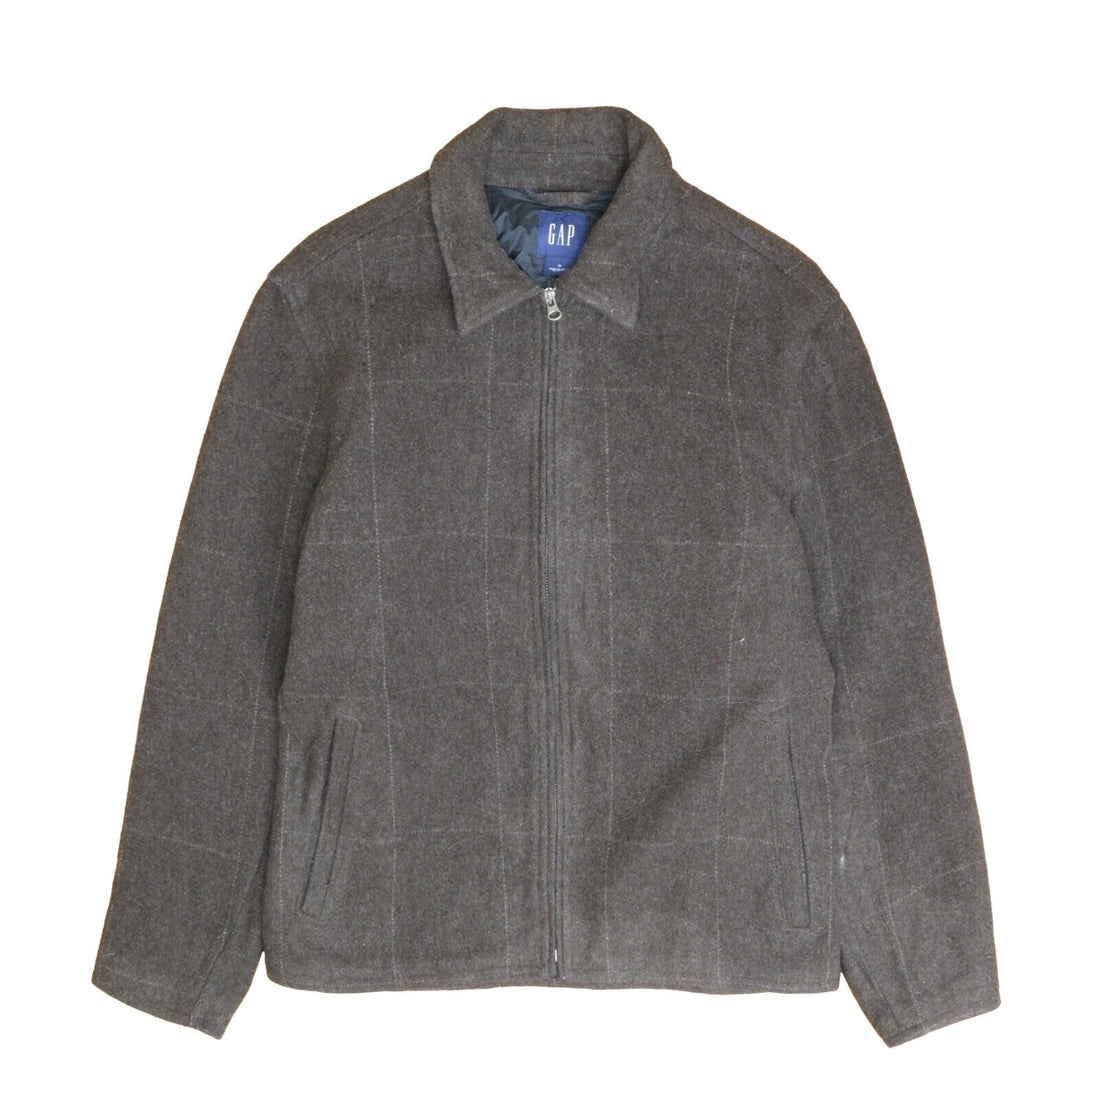 Vintage GAP Wool Coat Jacket Size Medium Plaid